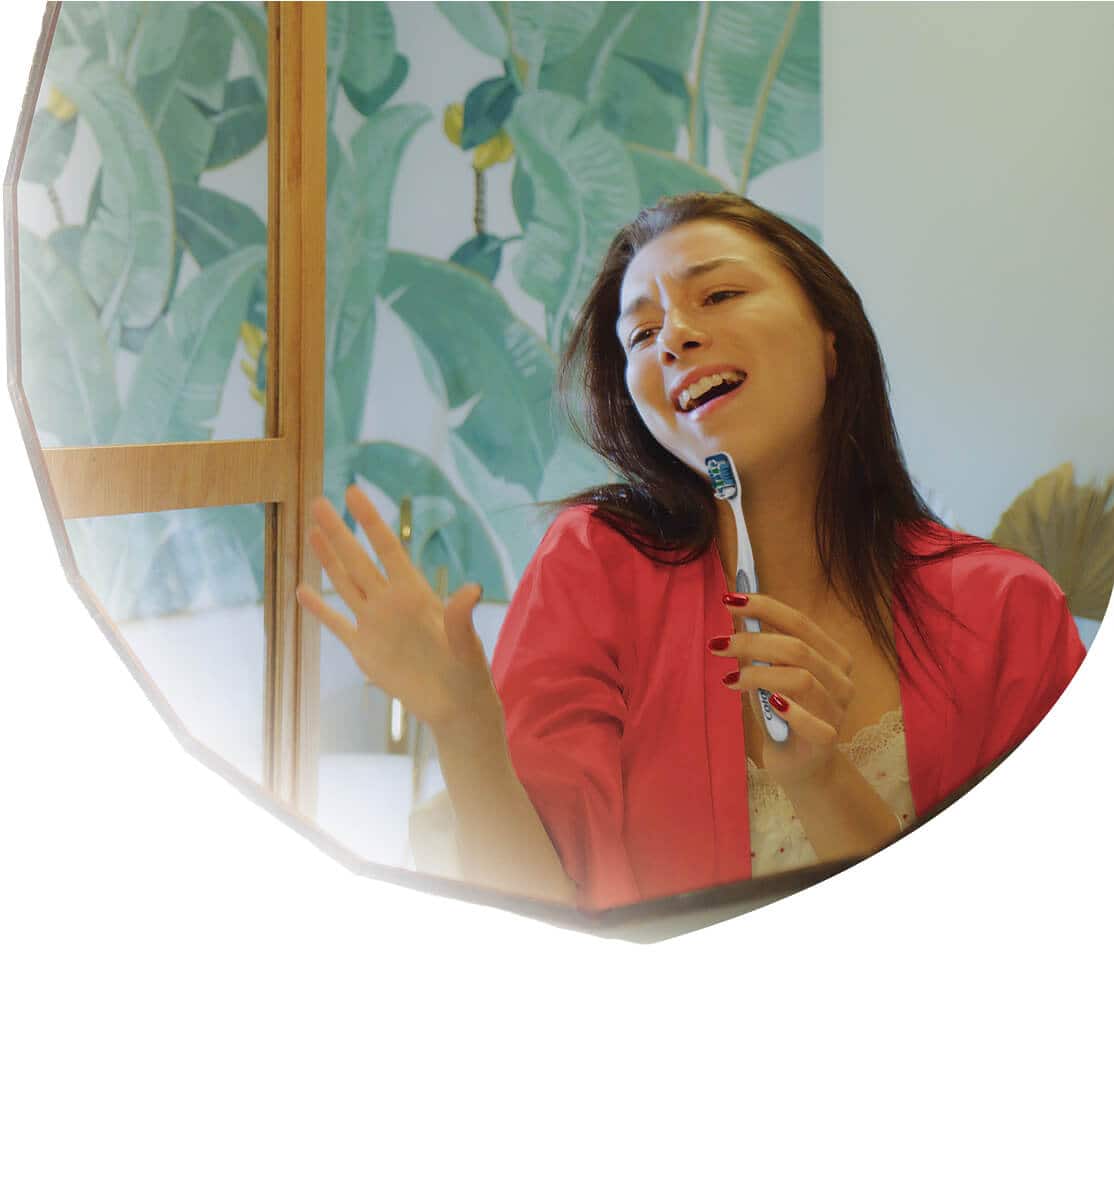 Mujer cantando frente al espejo con cepillo dental como micrófino